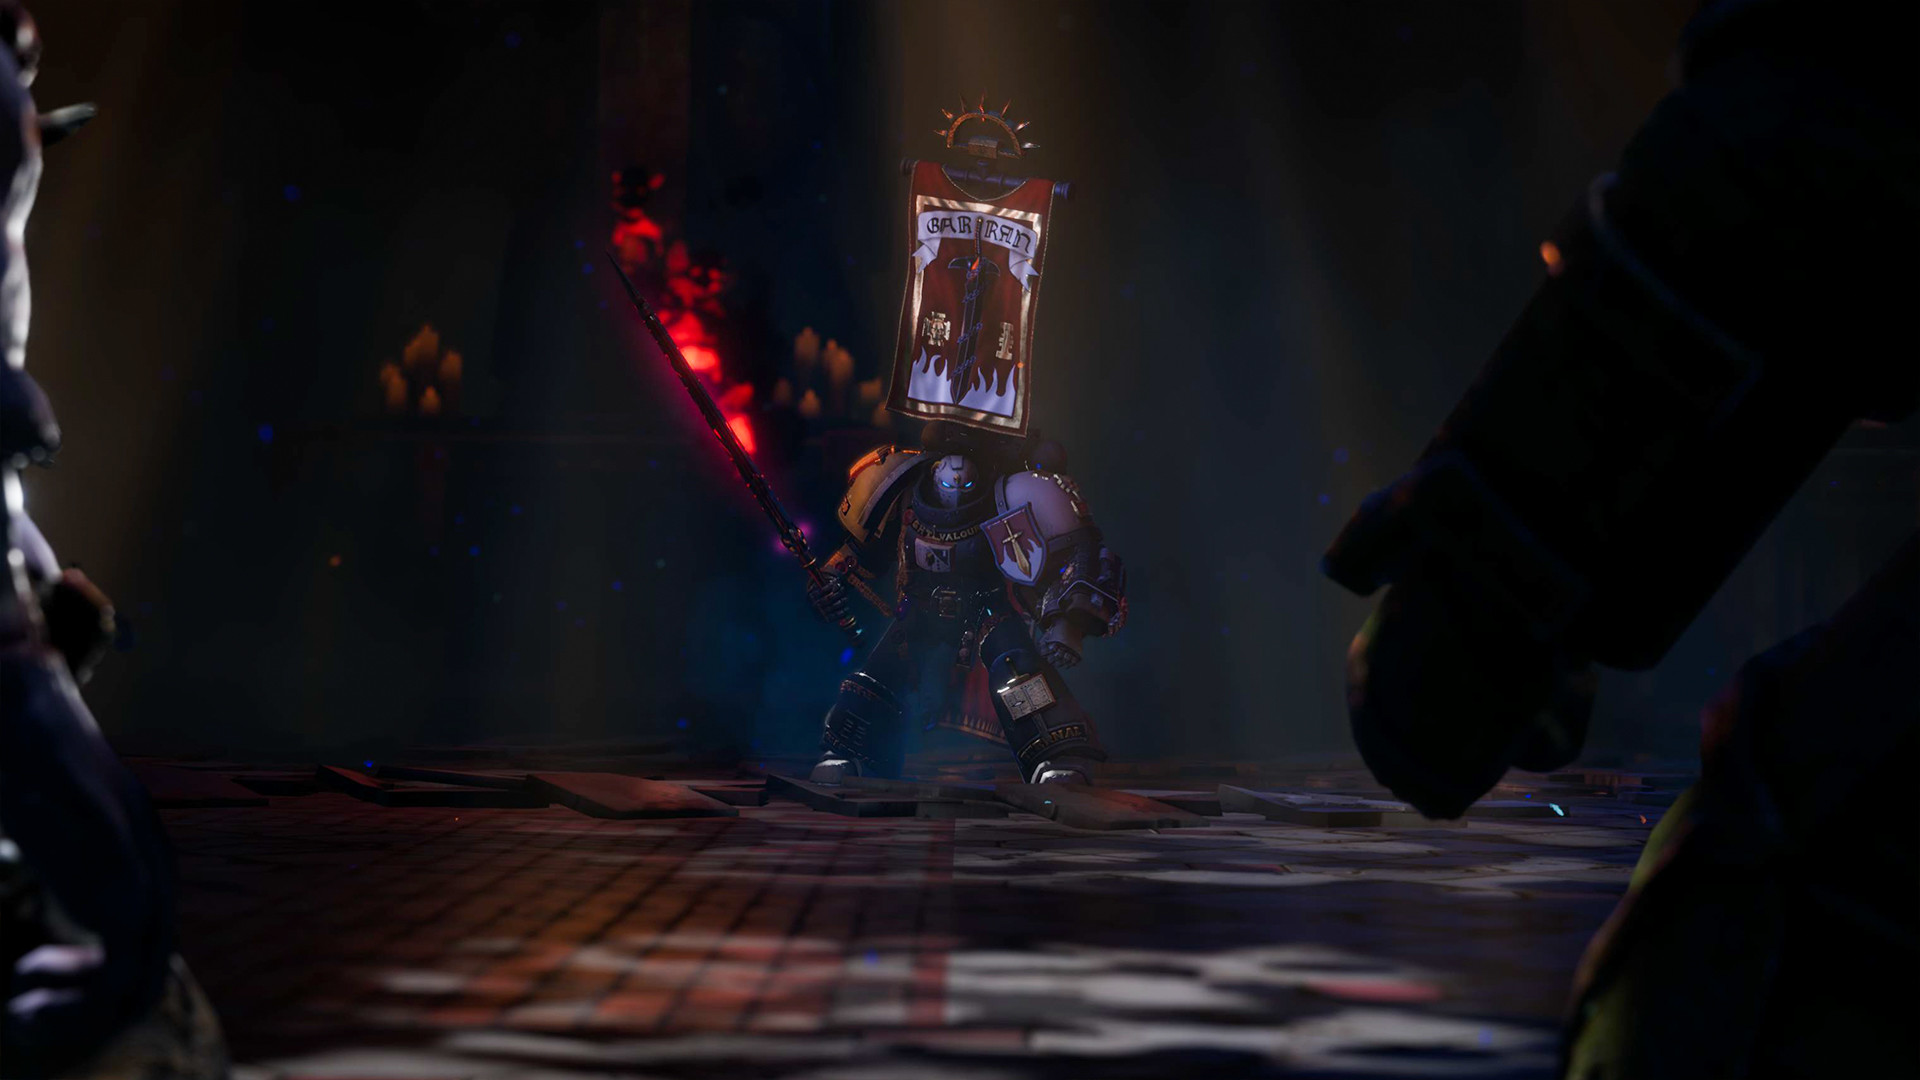 Warhammer 40,000: Chaos Gate - Daemonhunters Castellan Champion Upgrade Pack DLC Steam CD Key